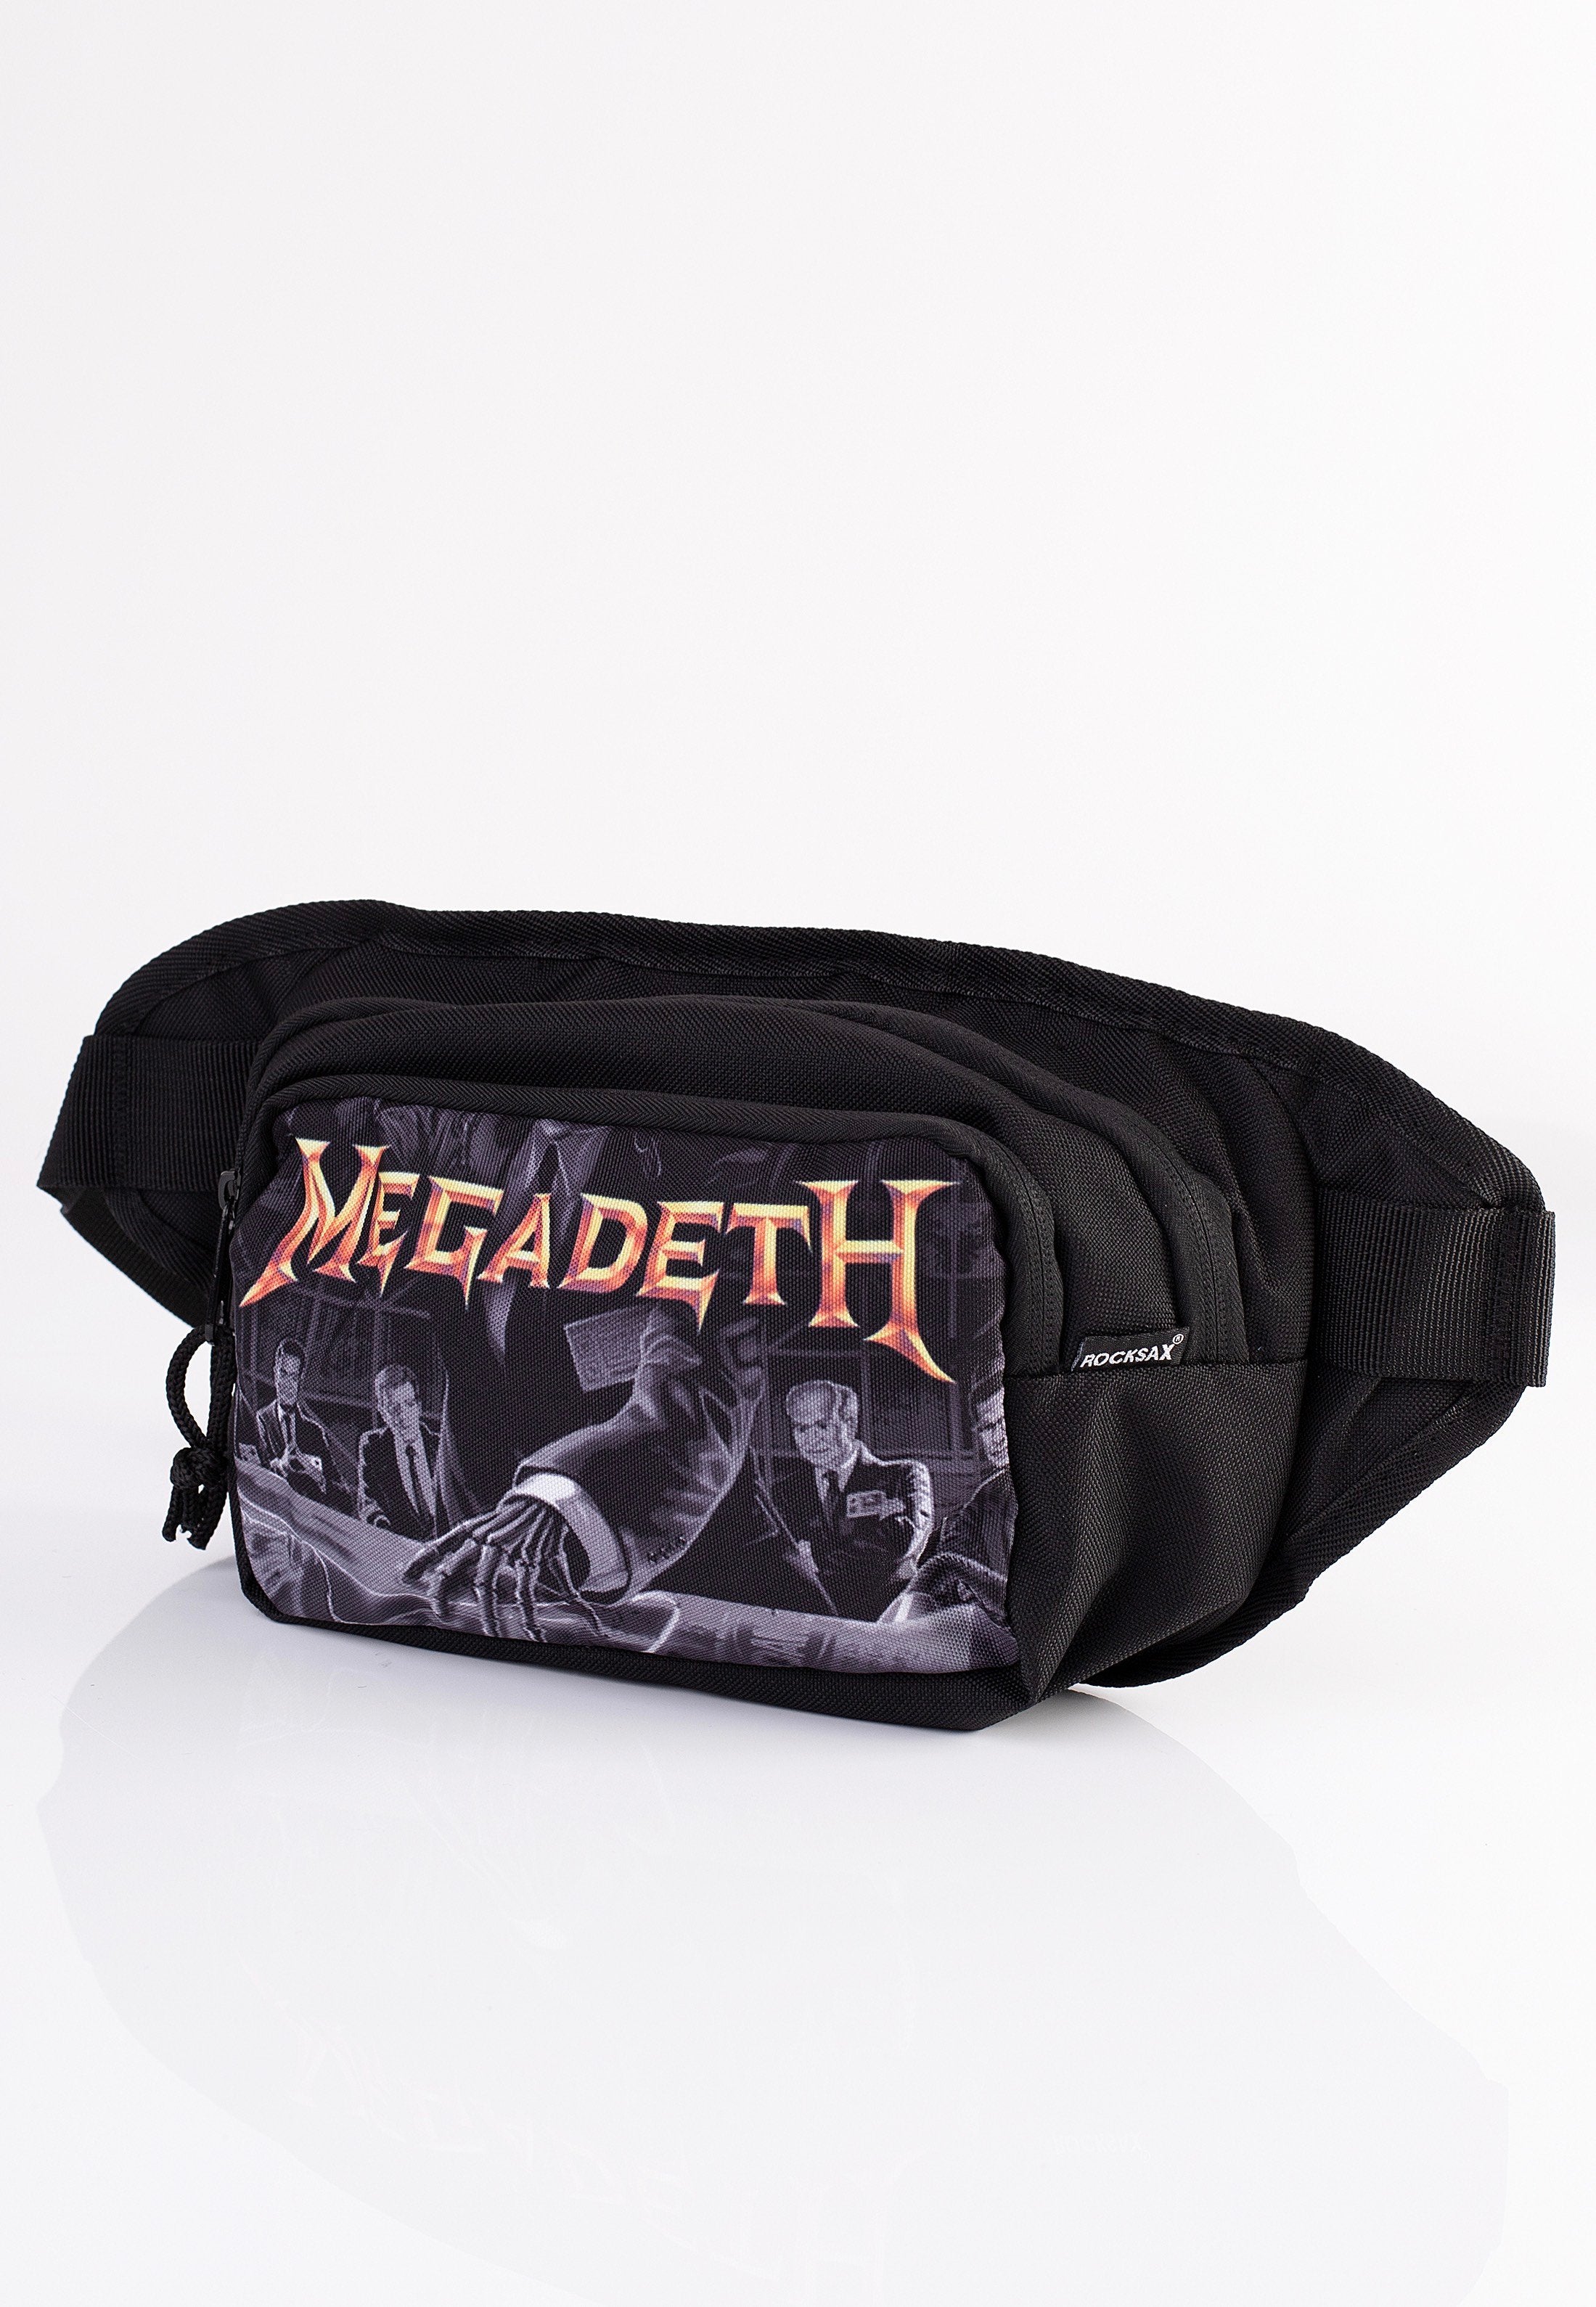 Megadeth - Rust In Peace - Hip Bag